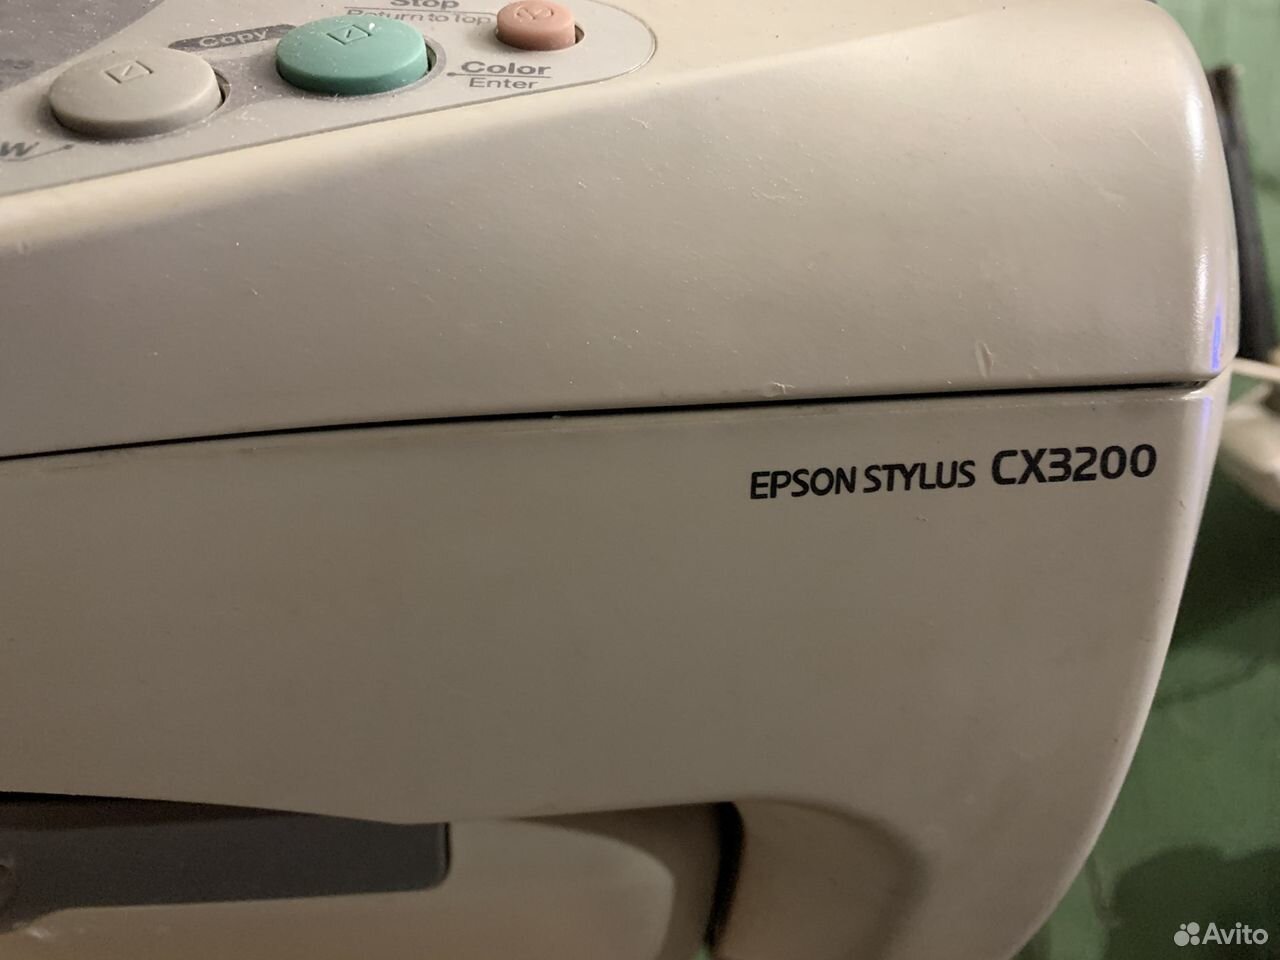  Epson cx3200 мфу принтер, сканер, ксерокс  89996442855 купить 3